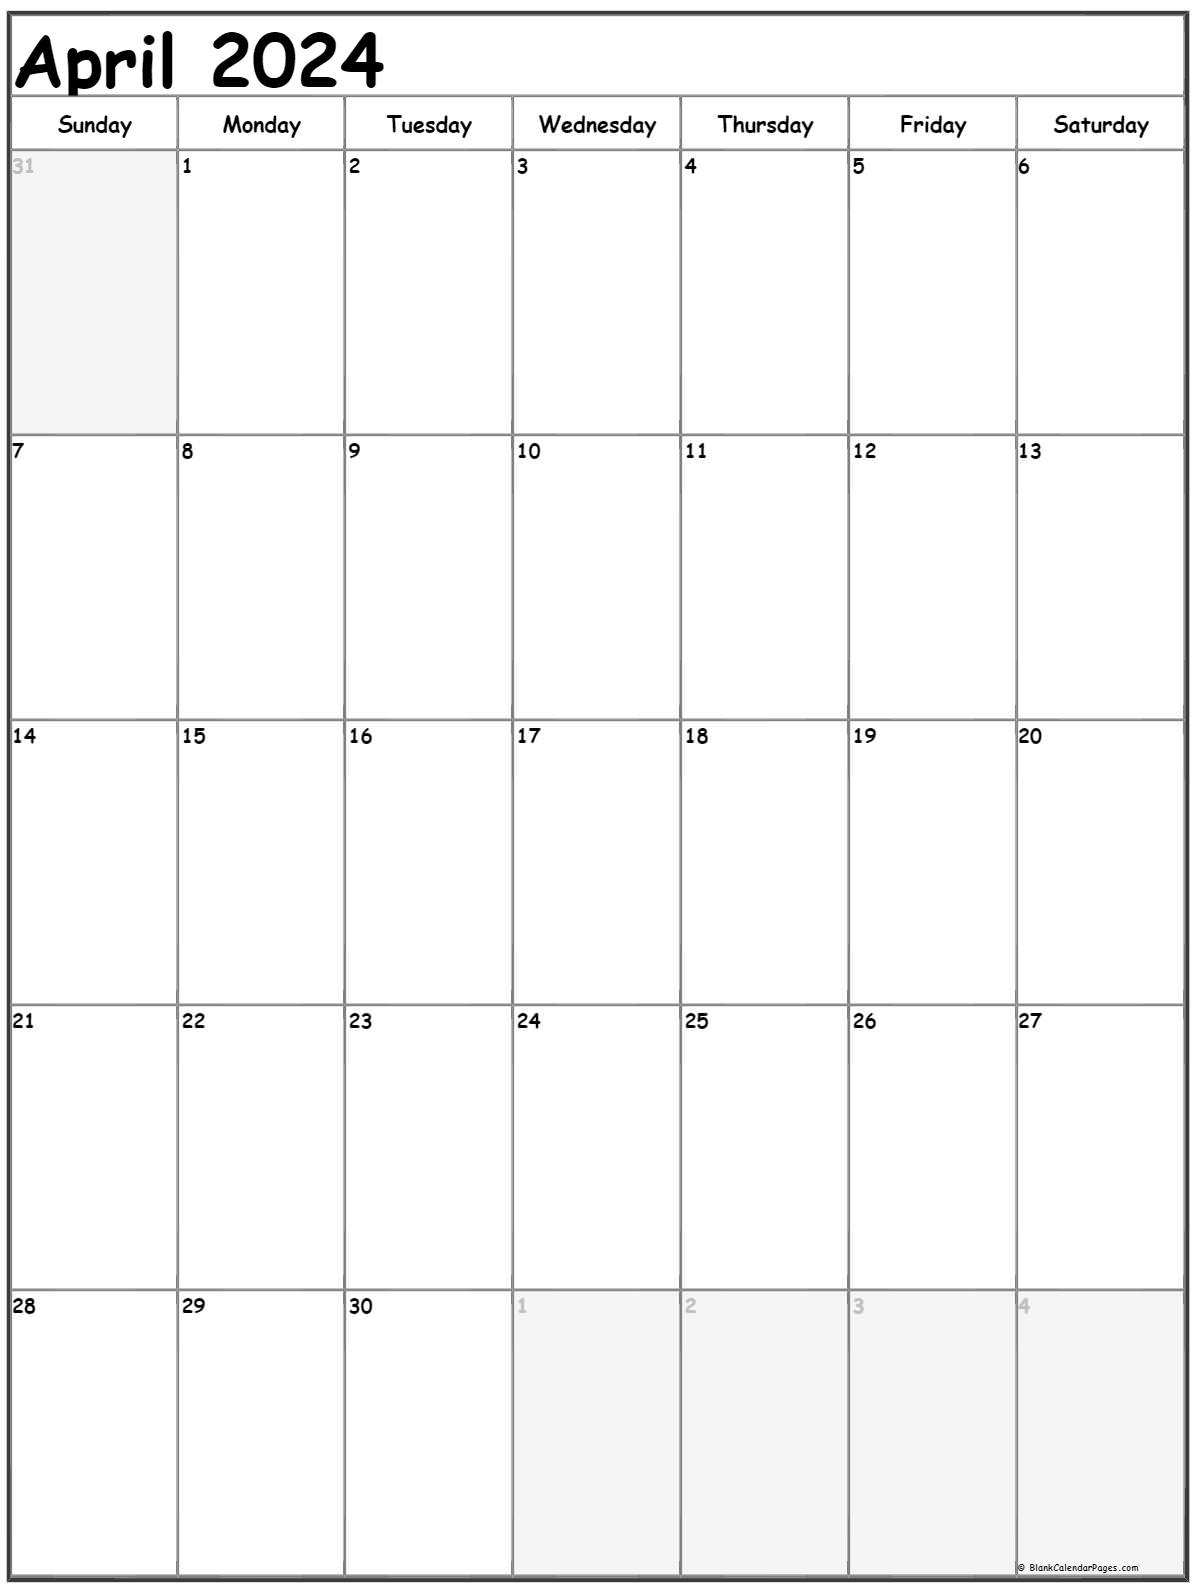 april-2023-blank-calendar-template-april-2023-calendar-free-printable-calendar-blank